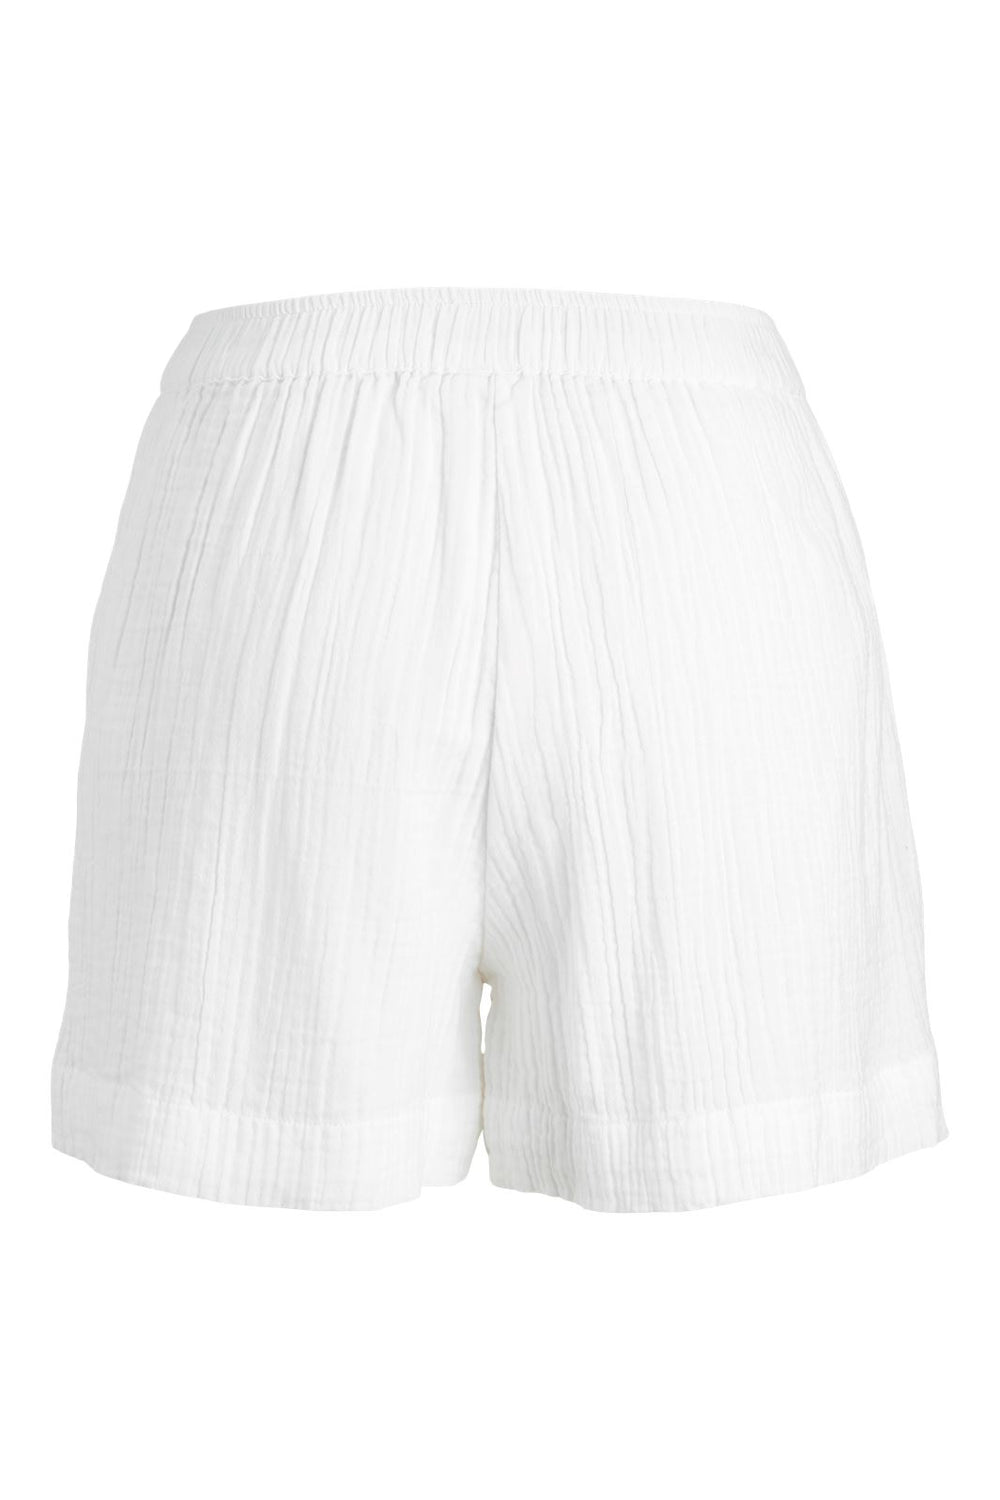 Jjxx - Jxmia Muslin Shorts - 4486805 White